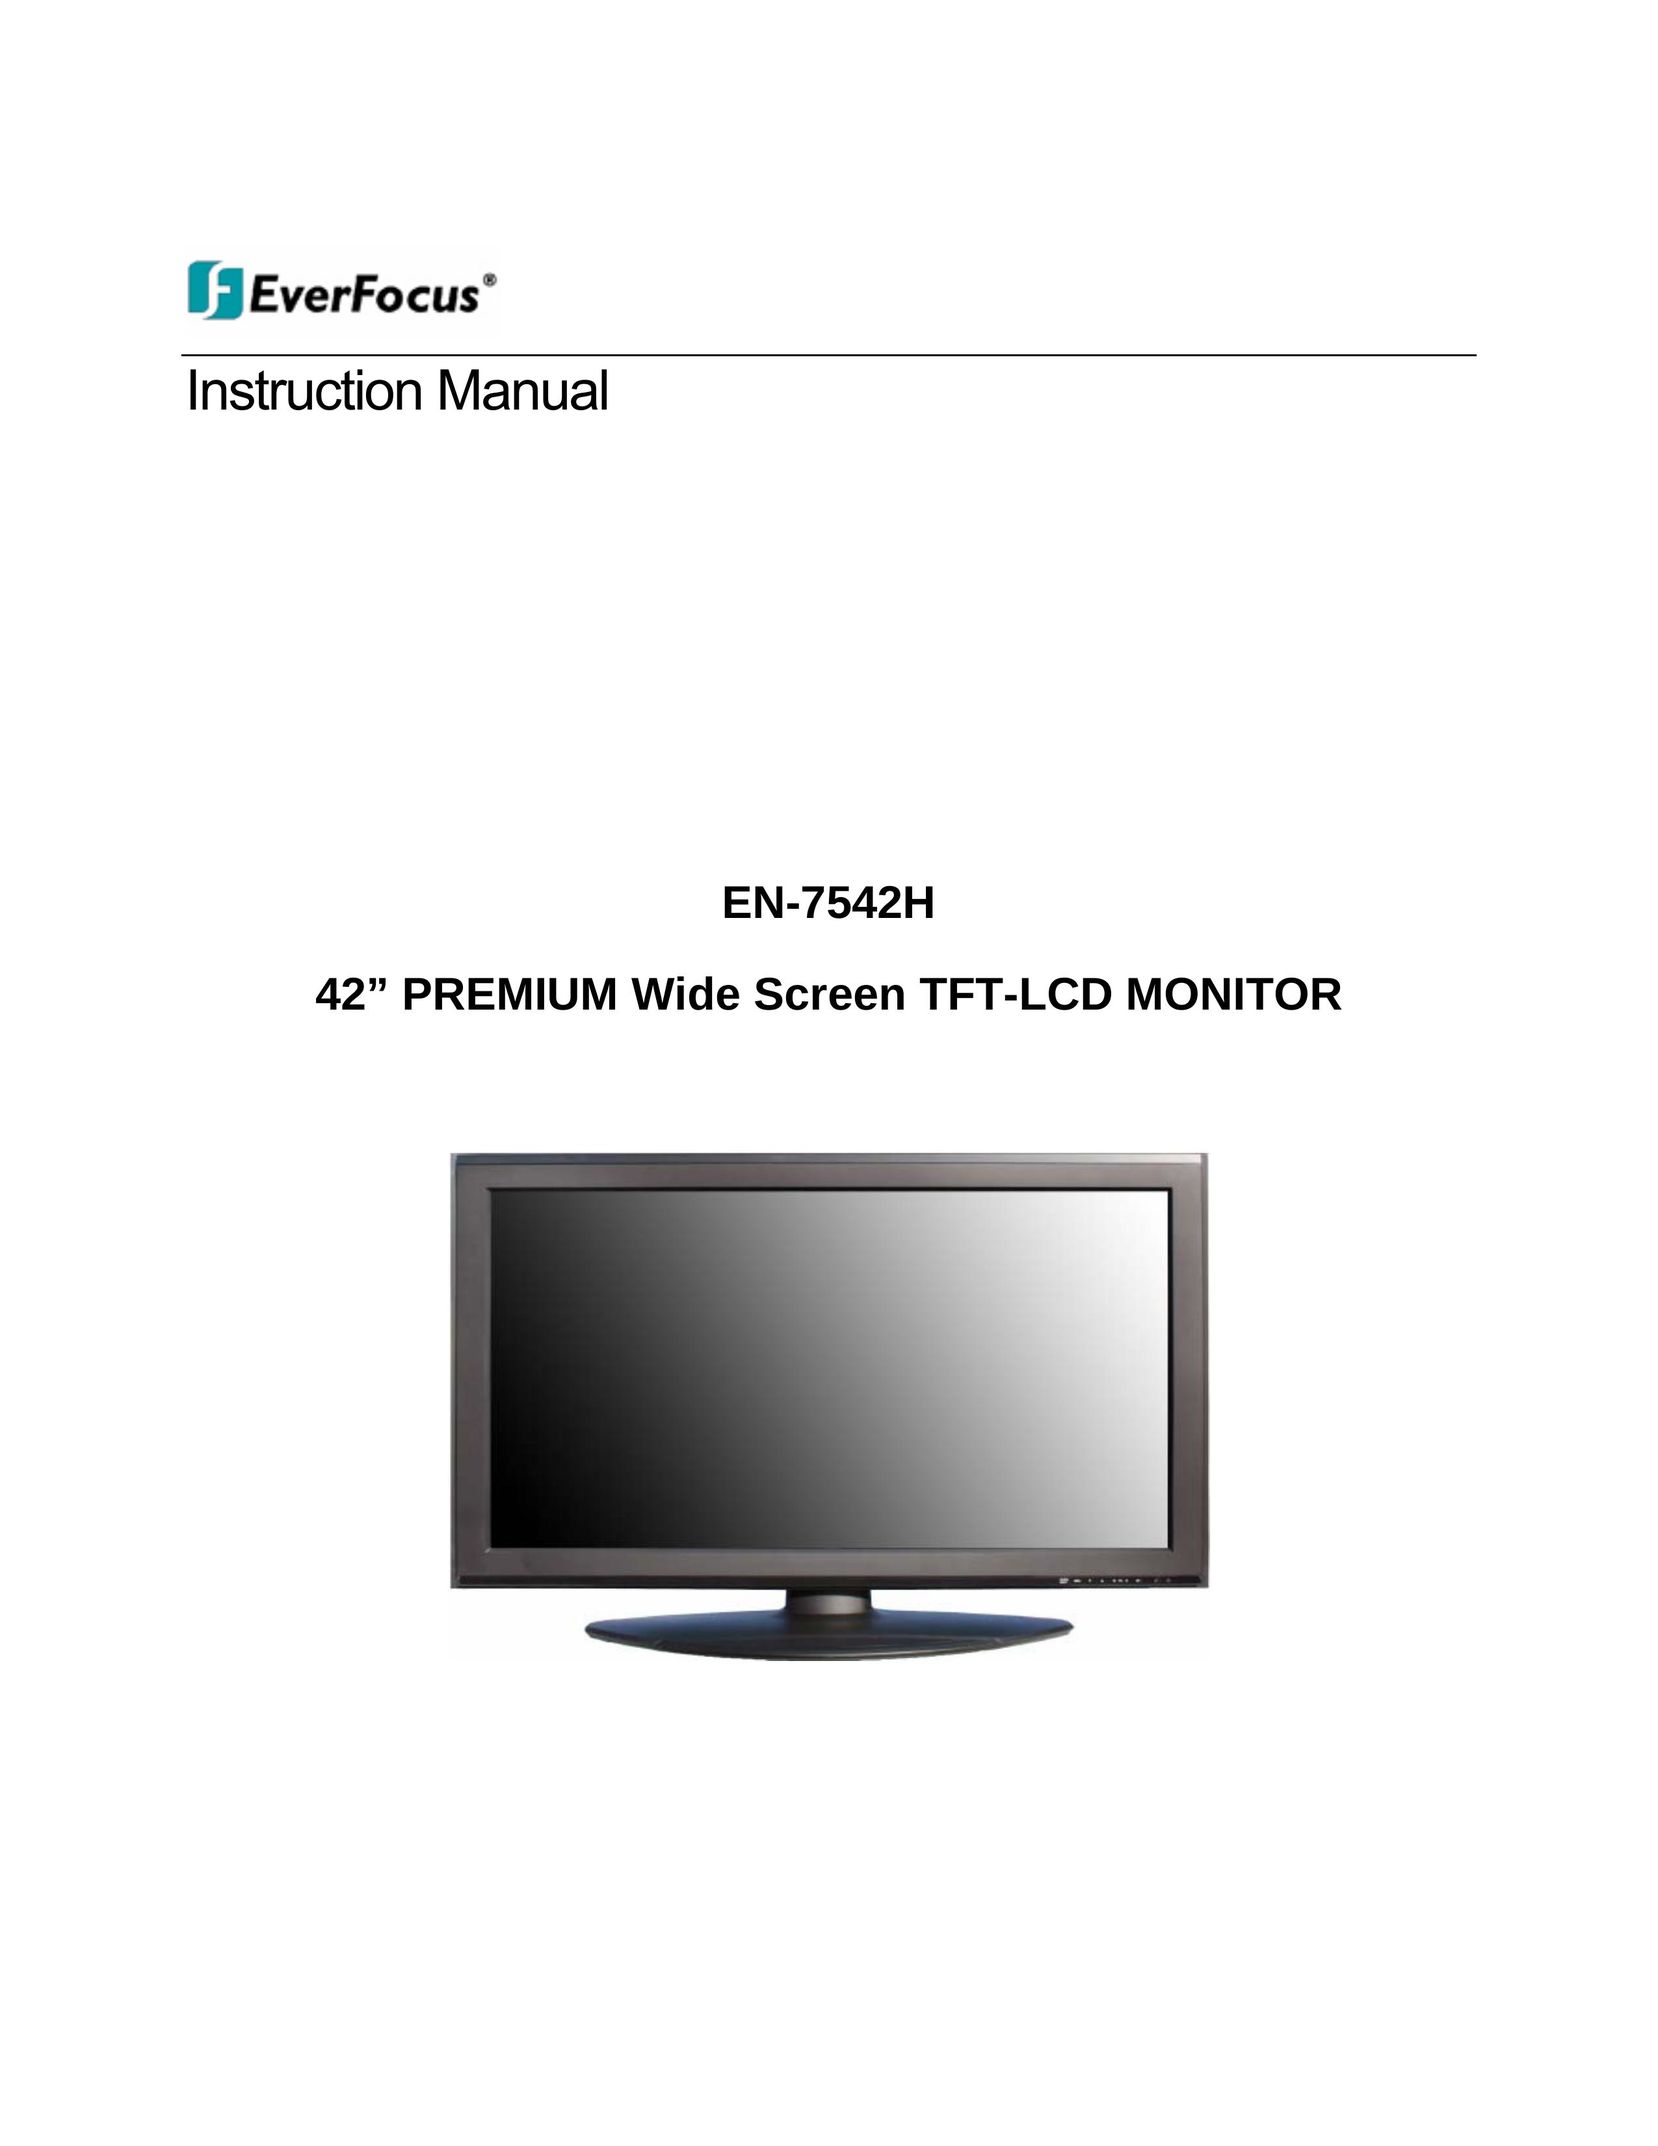 EverFocus EN-7542H Flat Panel Television User Manual